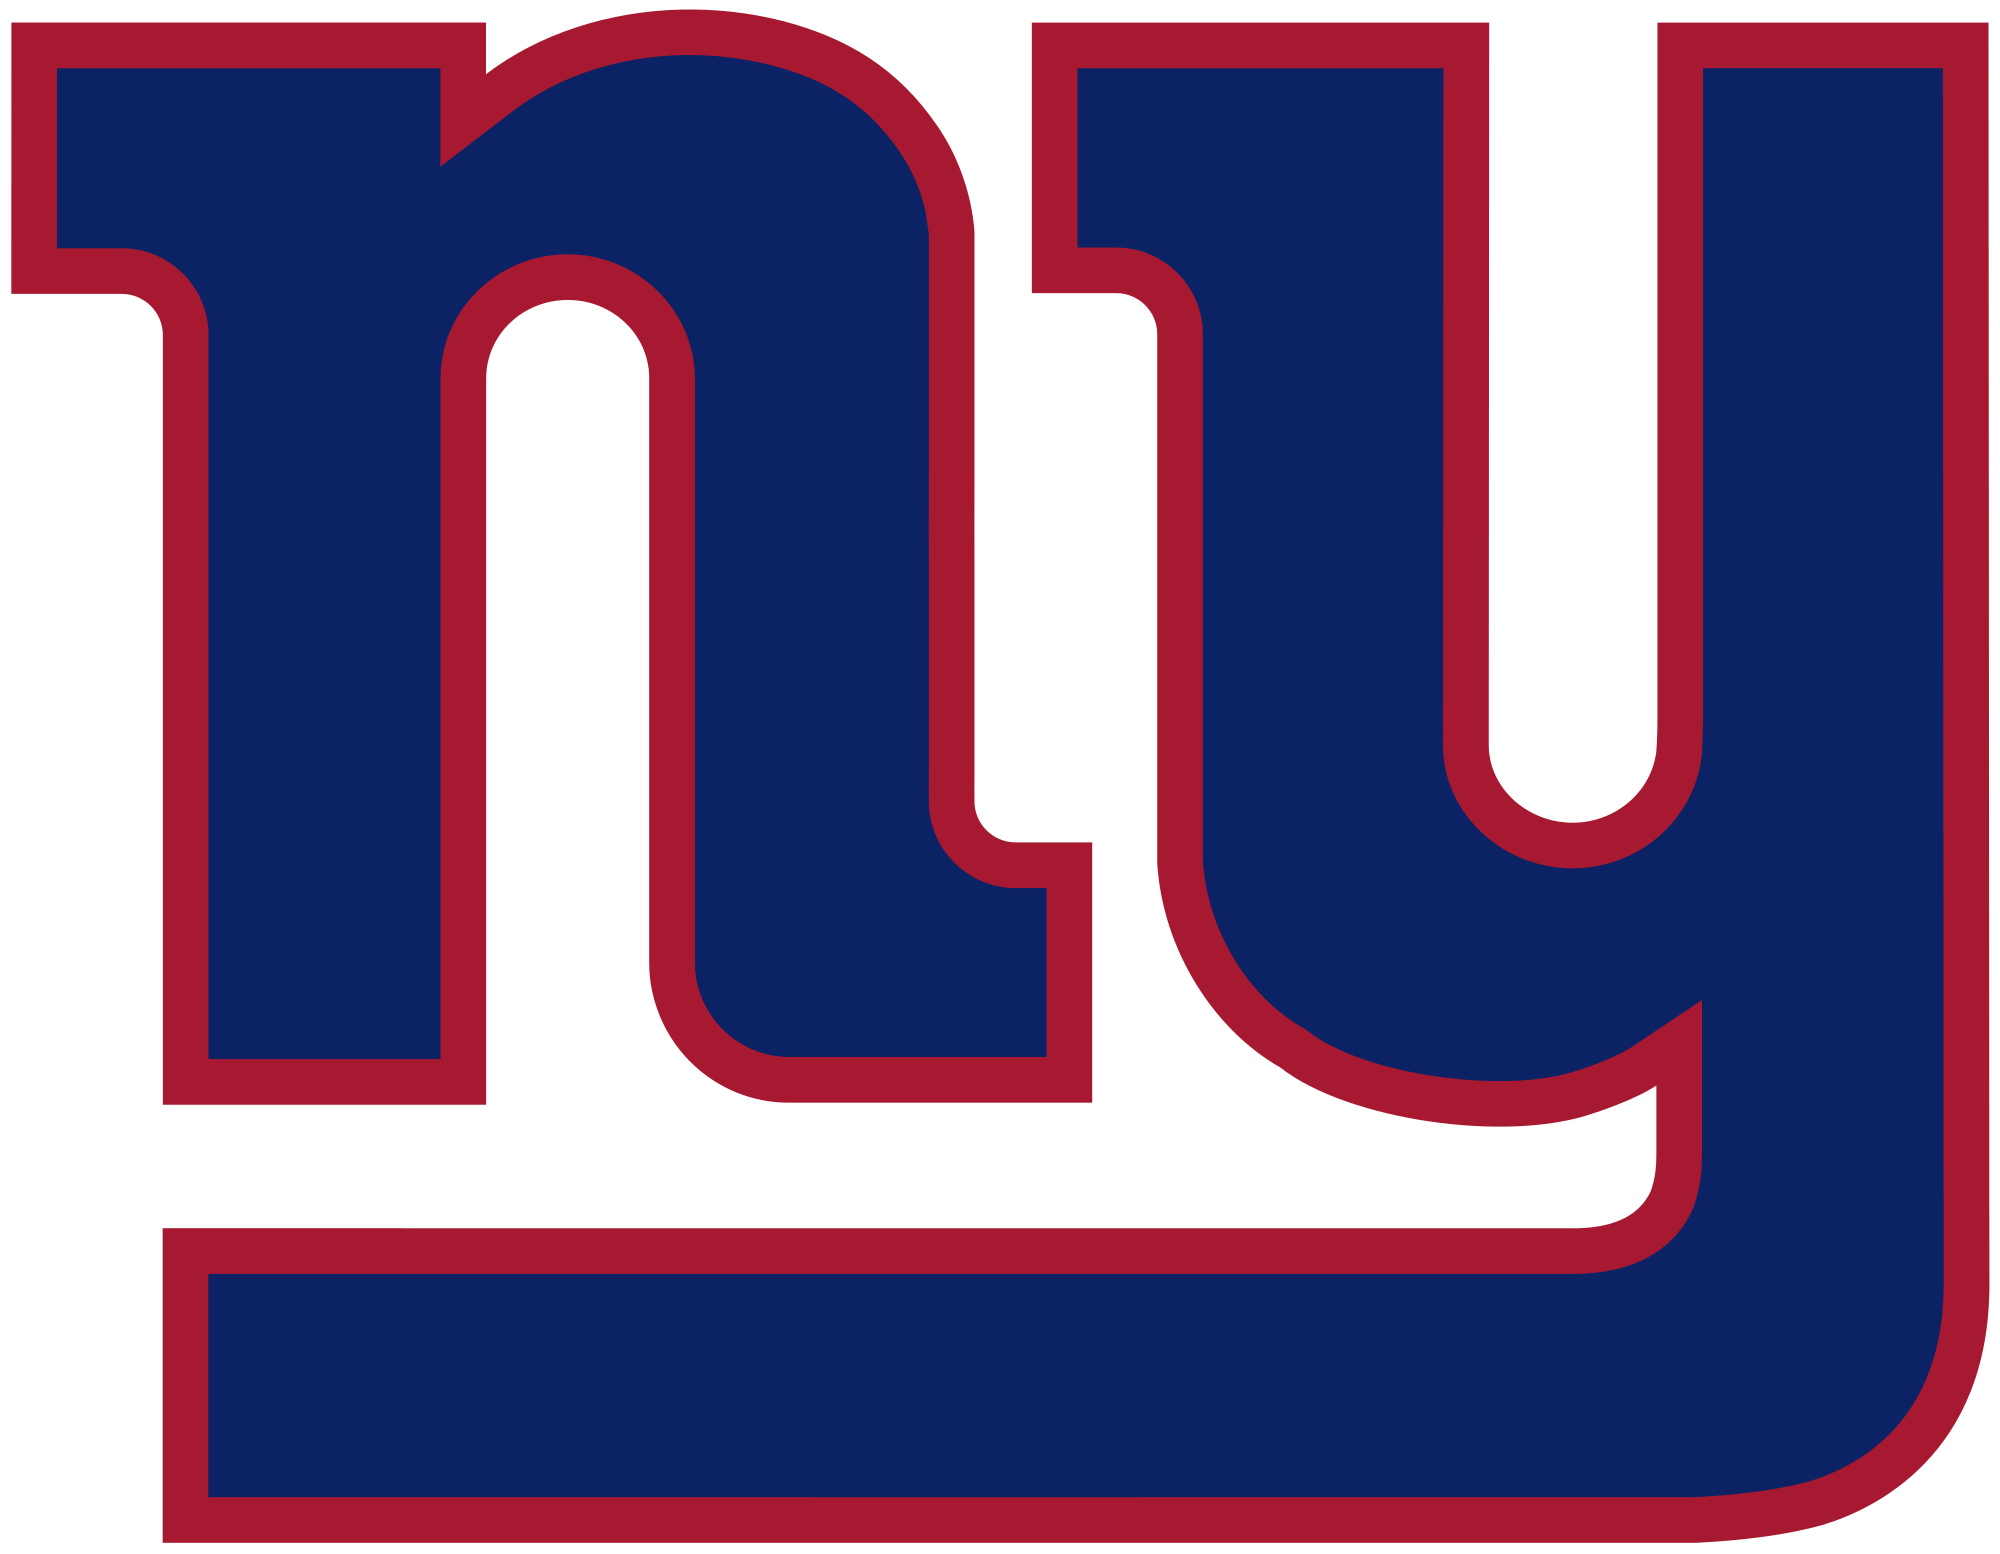 New York Giants Logo - File:New York Giants logo.svg - Wikimedia Commons